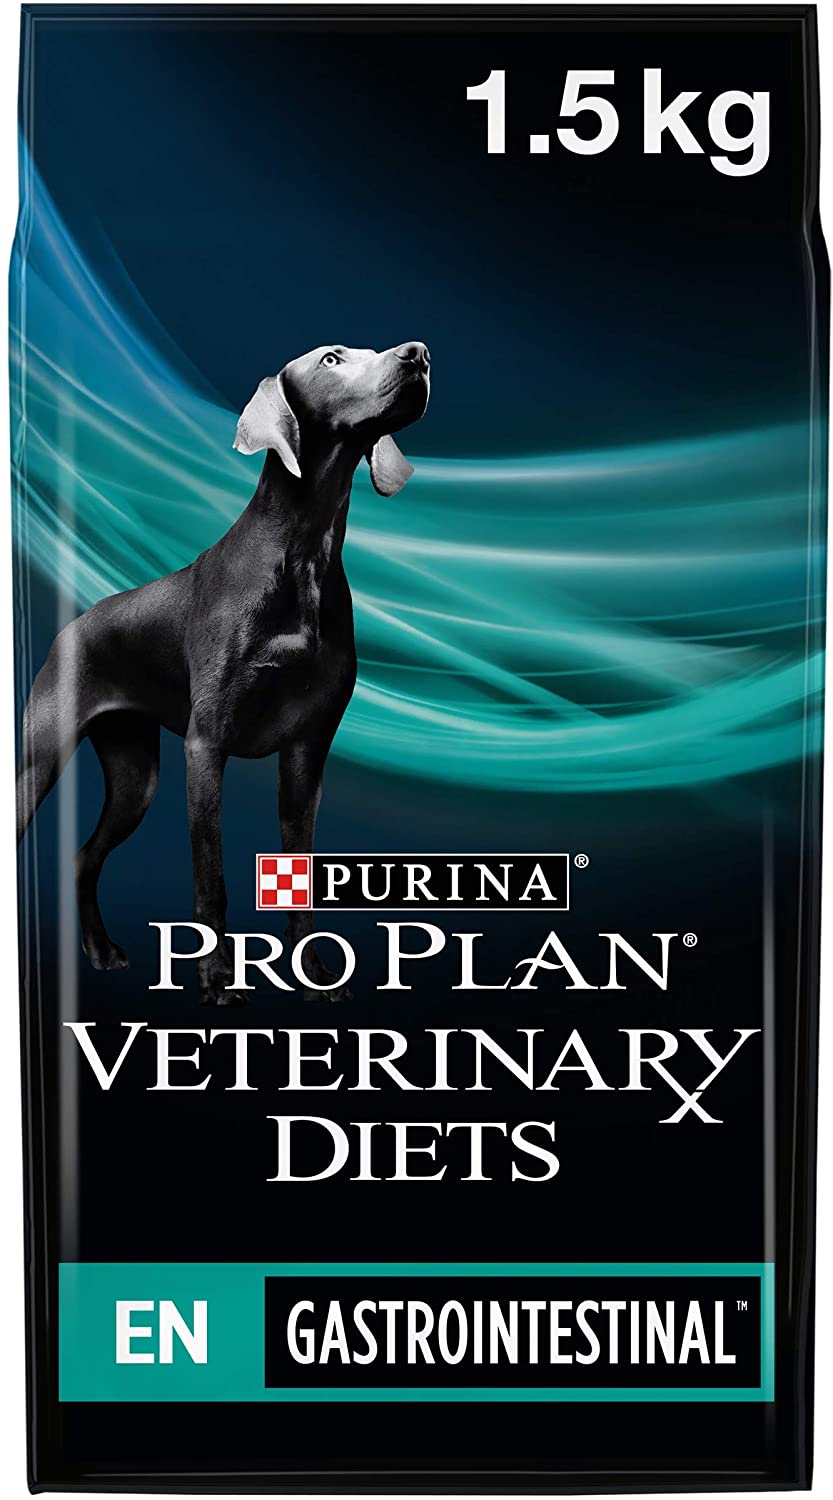  Purina Pro Plan Vet Canine En 4X1.5Kg, 1.5kg 